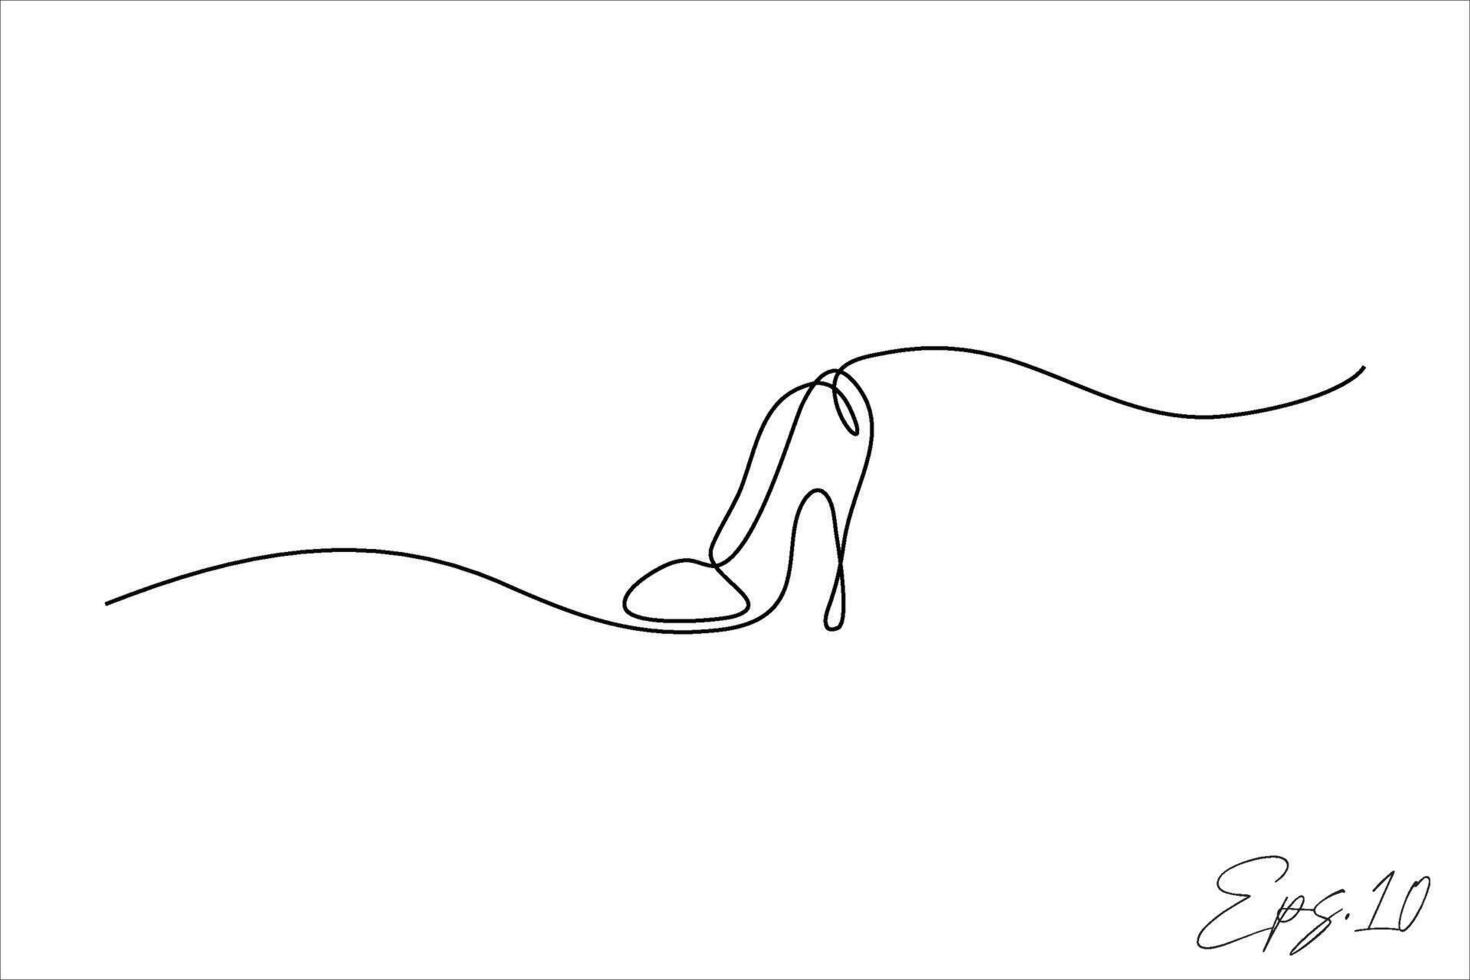 continuous line vector illustration design of women's shoes